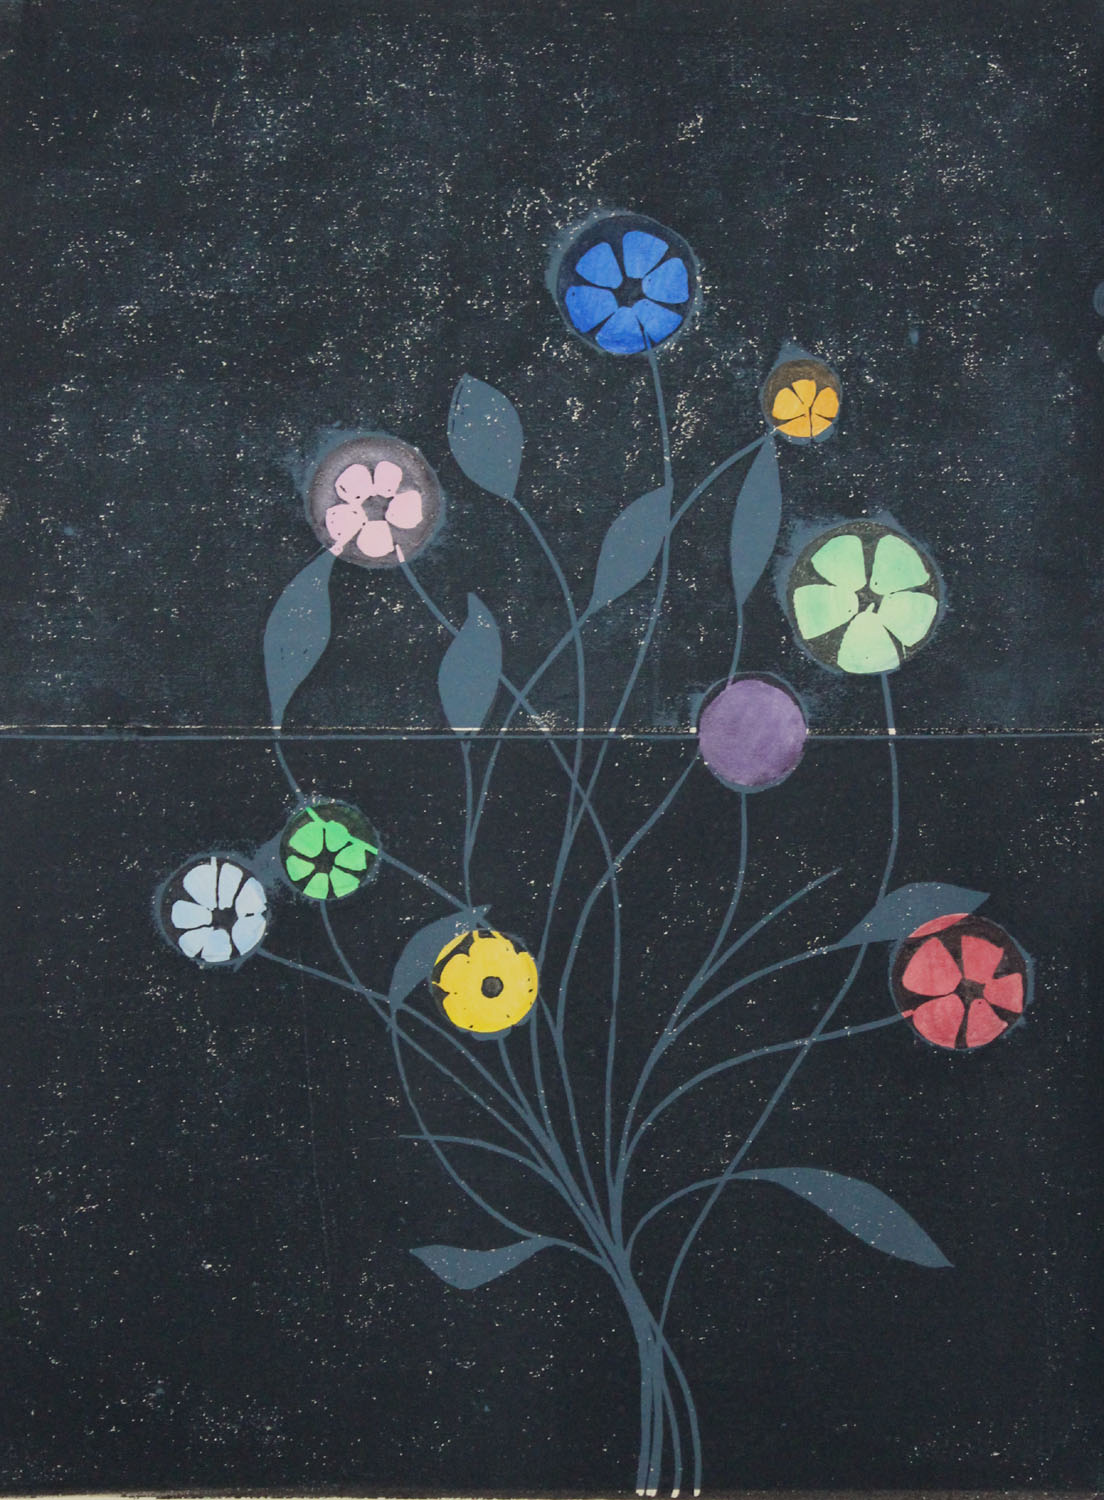   Metal Flowers I    2015, lino print and watercolour, 40 x 30cm  